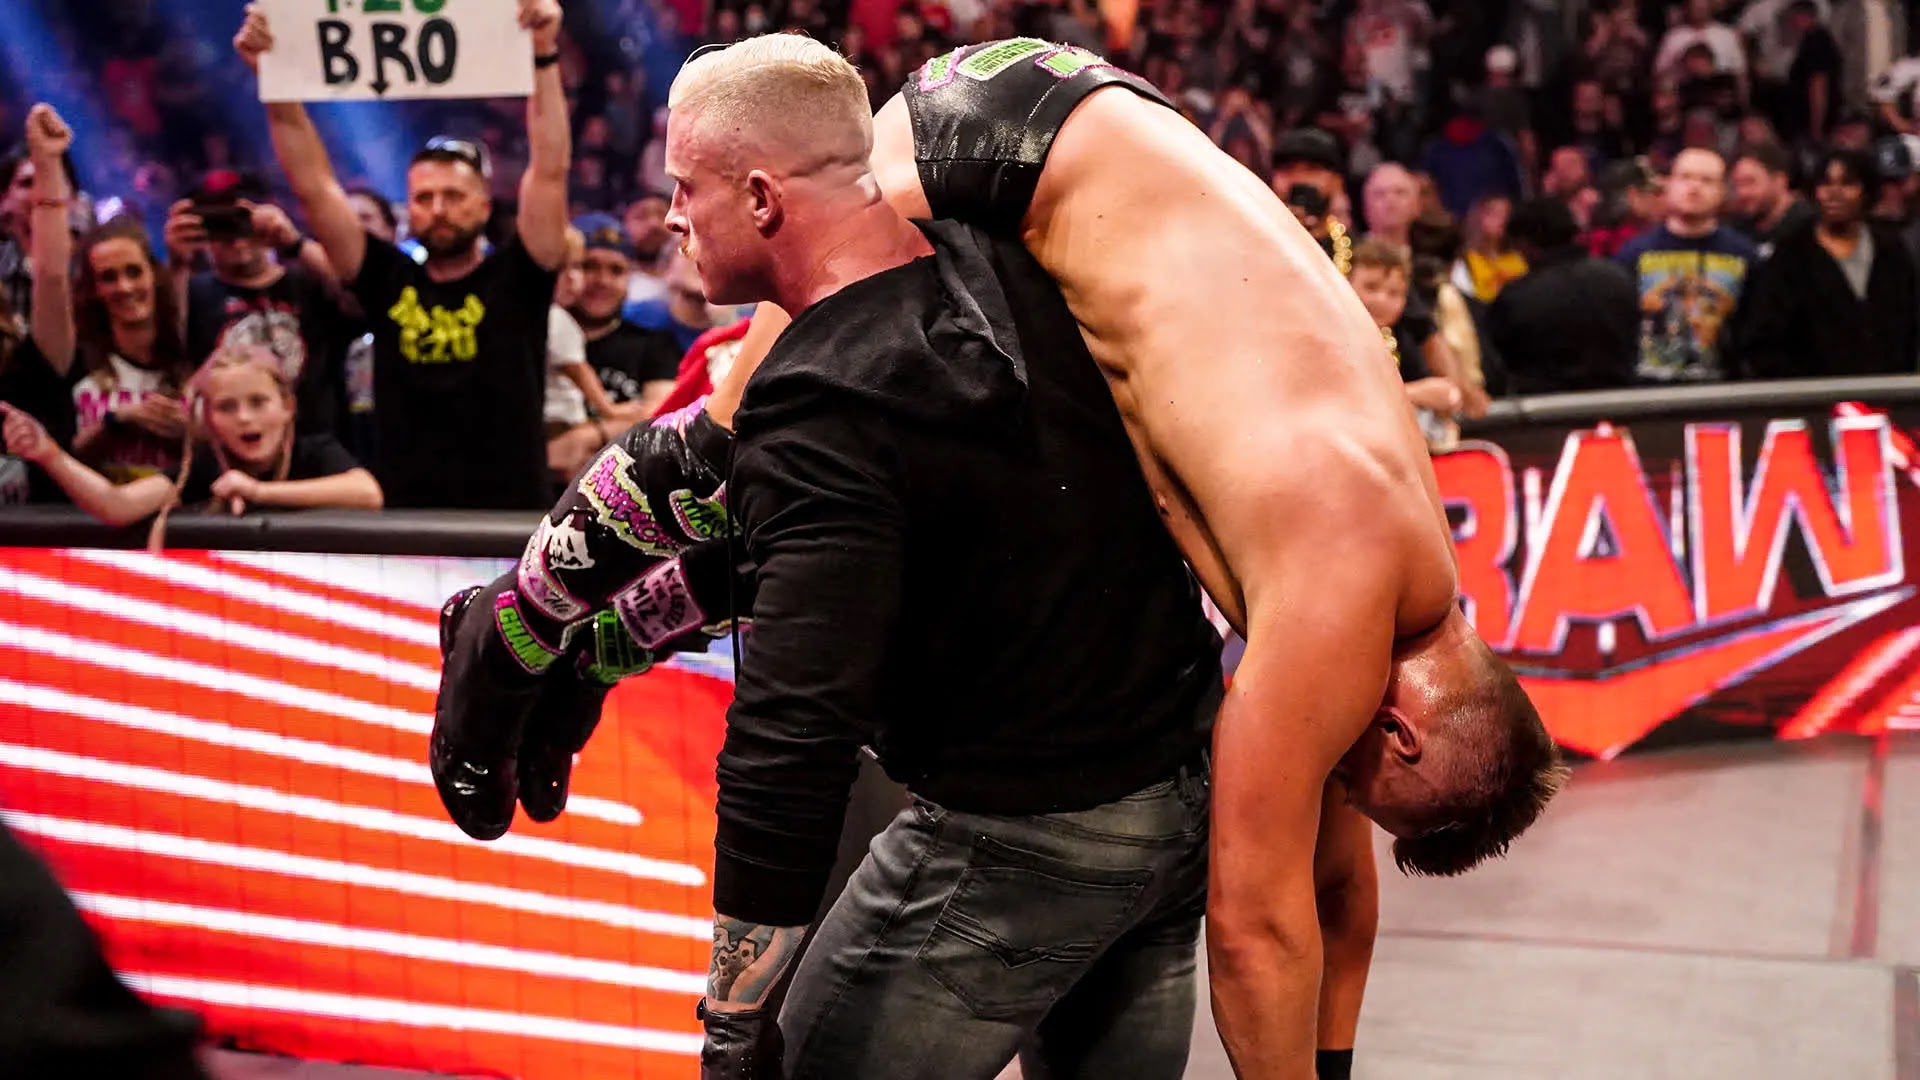 WATCH: Dexter Lumis Kidnaps The Miz After WWE RAW Went Off Air